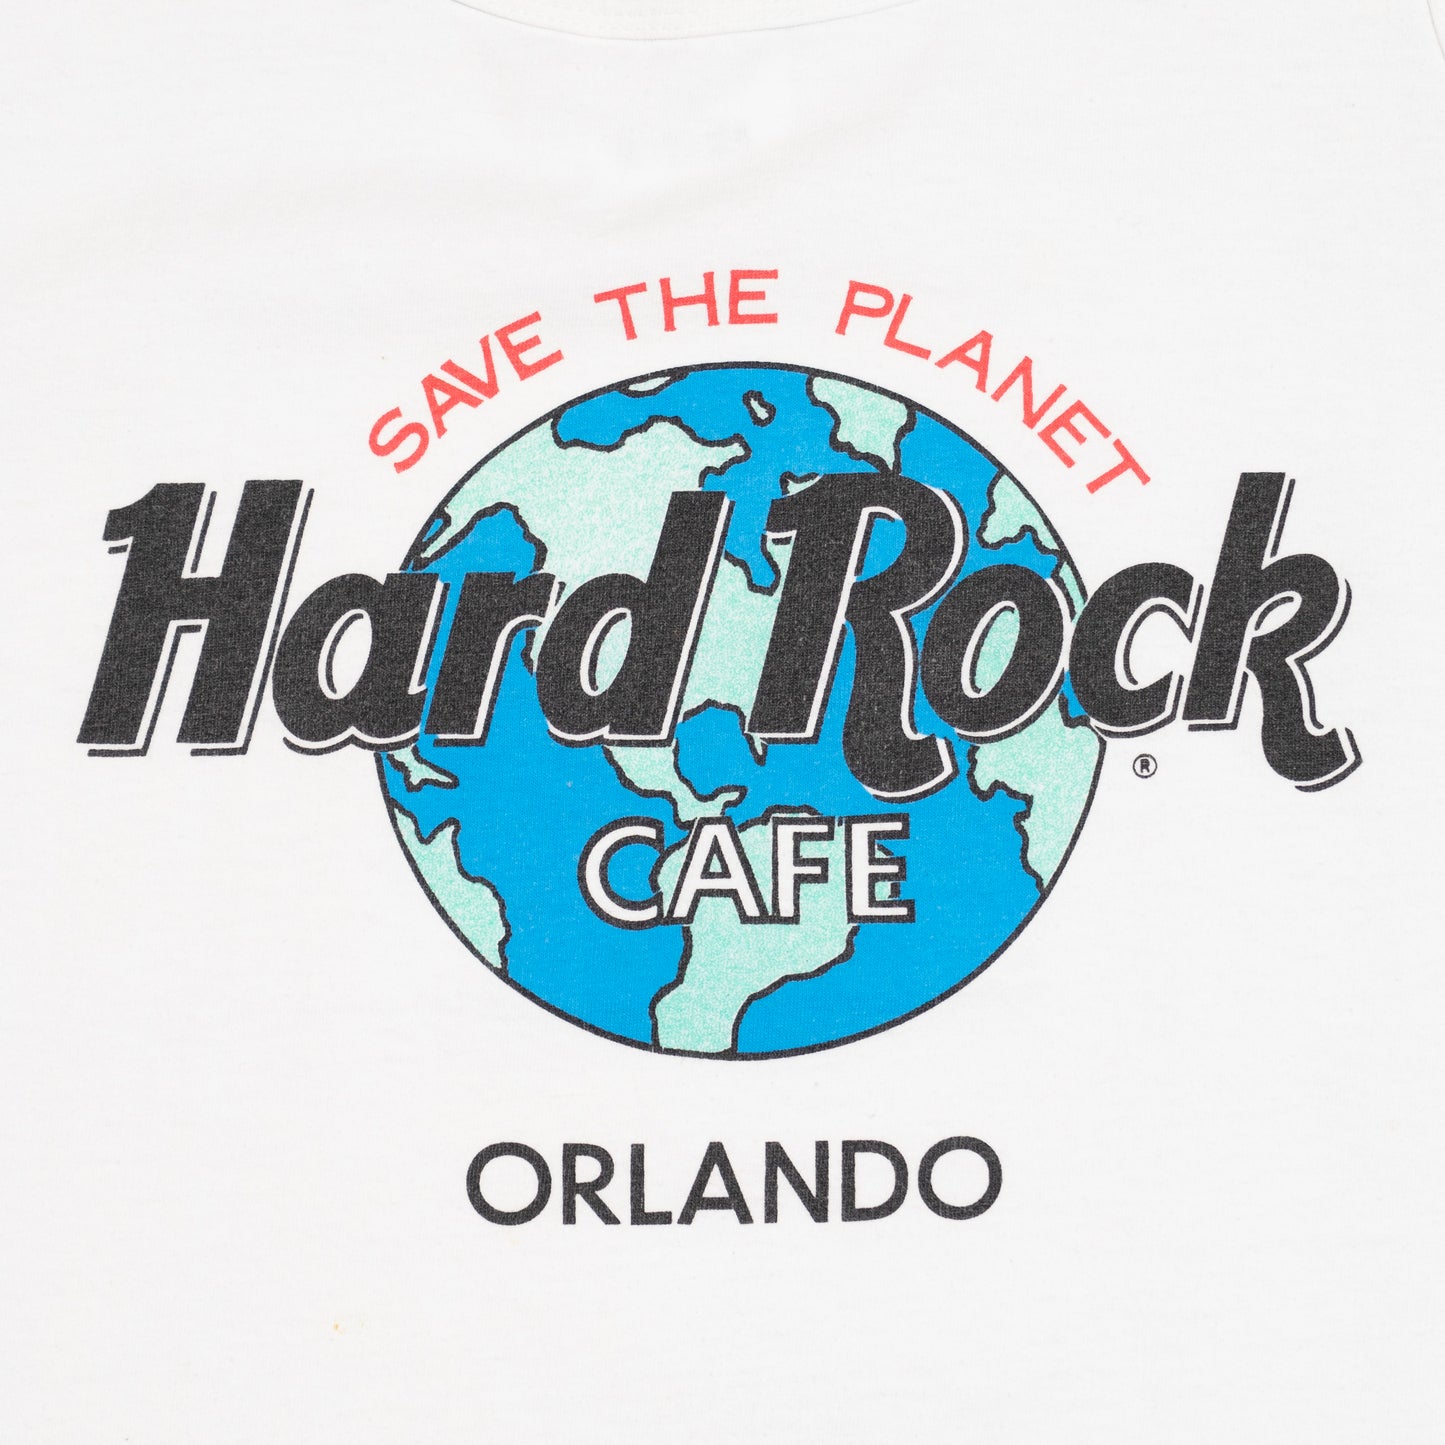 Hard Rock Cafe Orlando Tanktop, XL